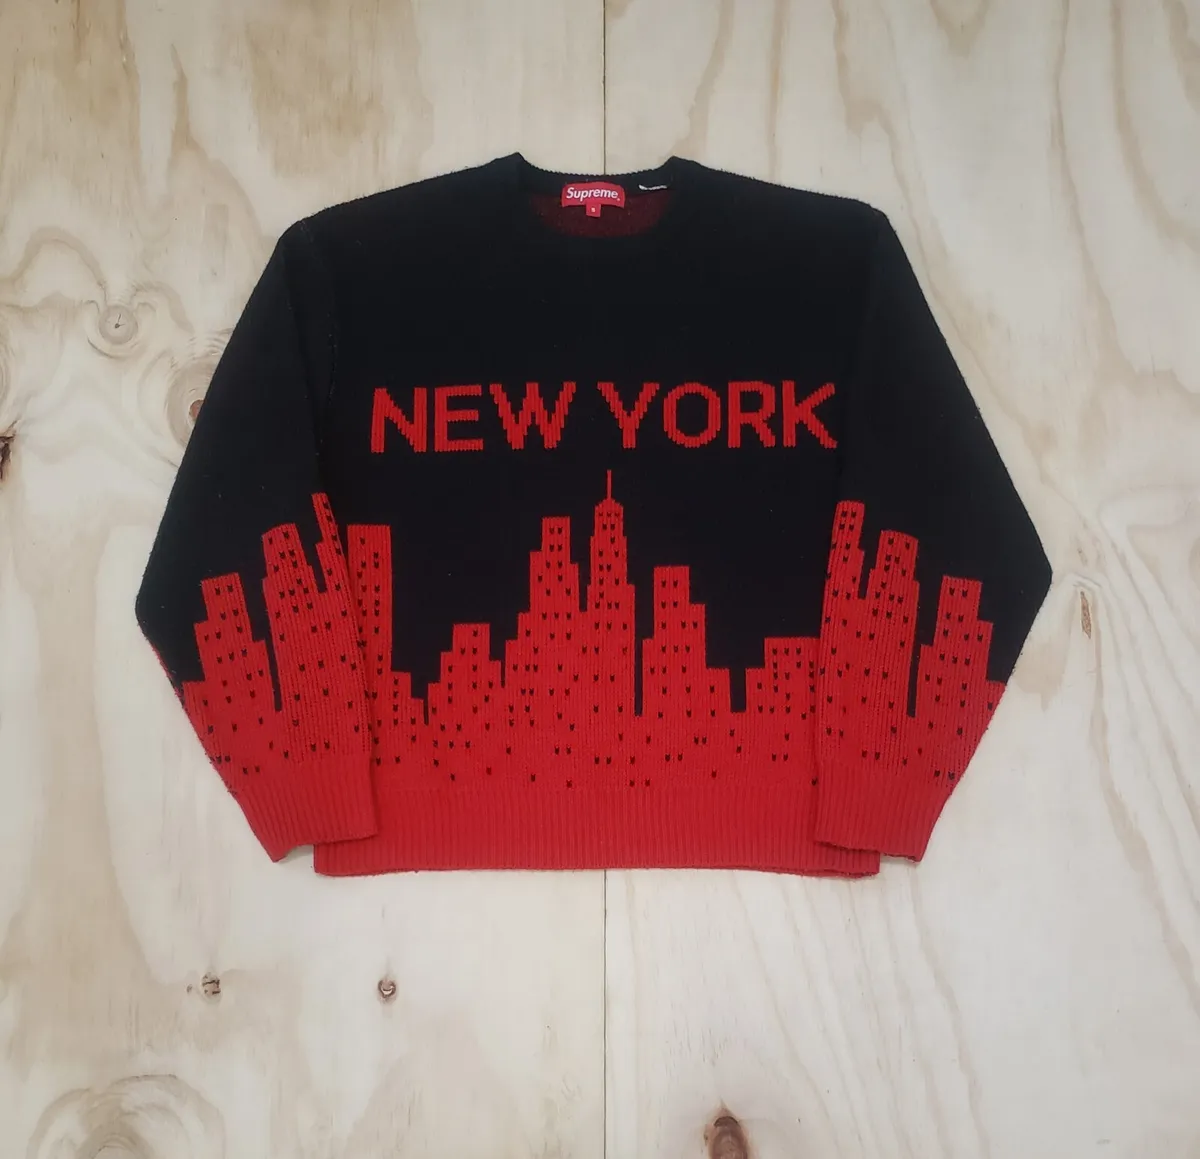 Supreme New York Sweater